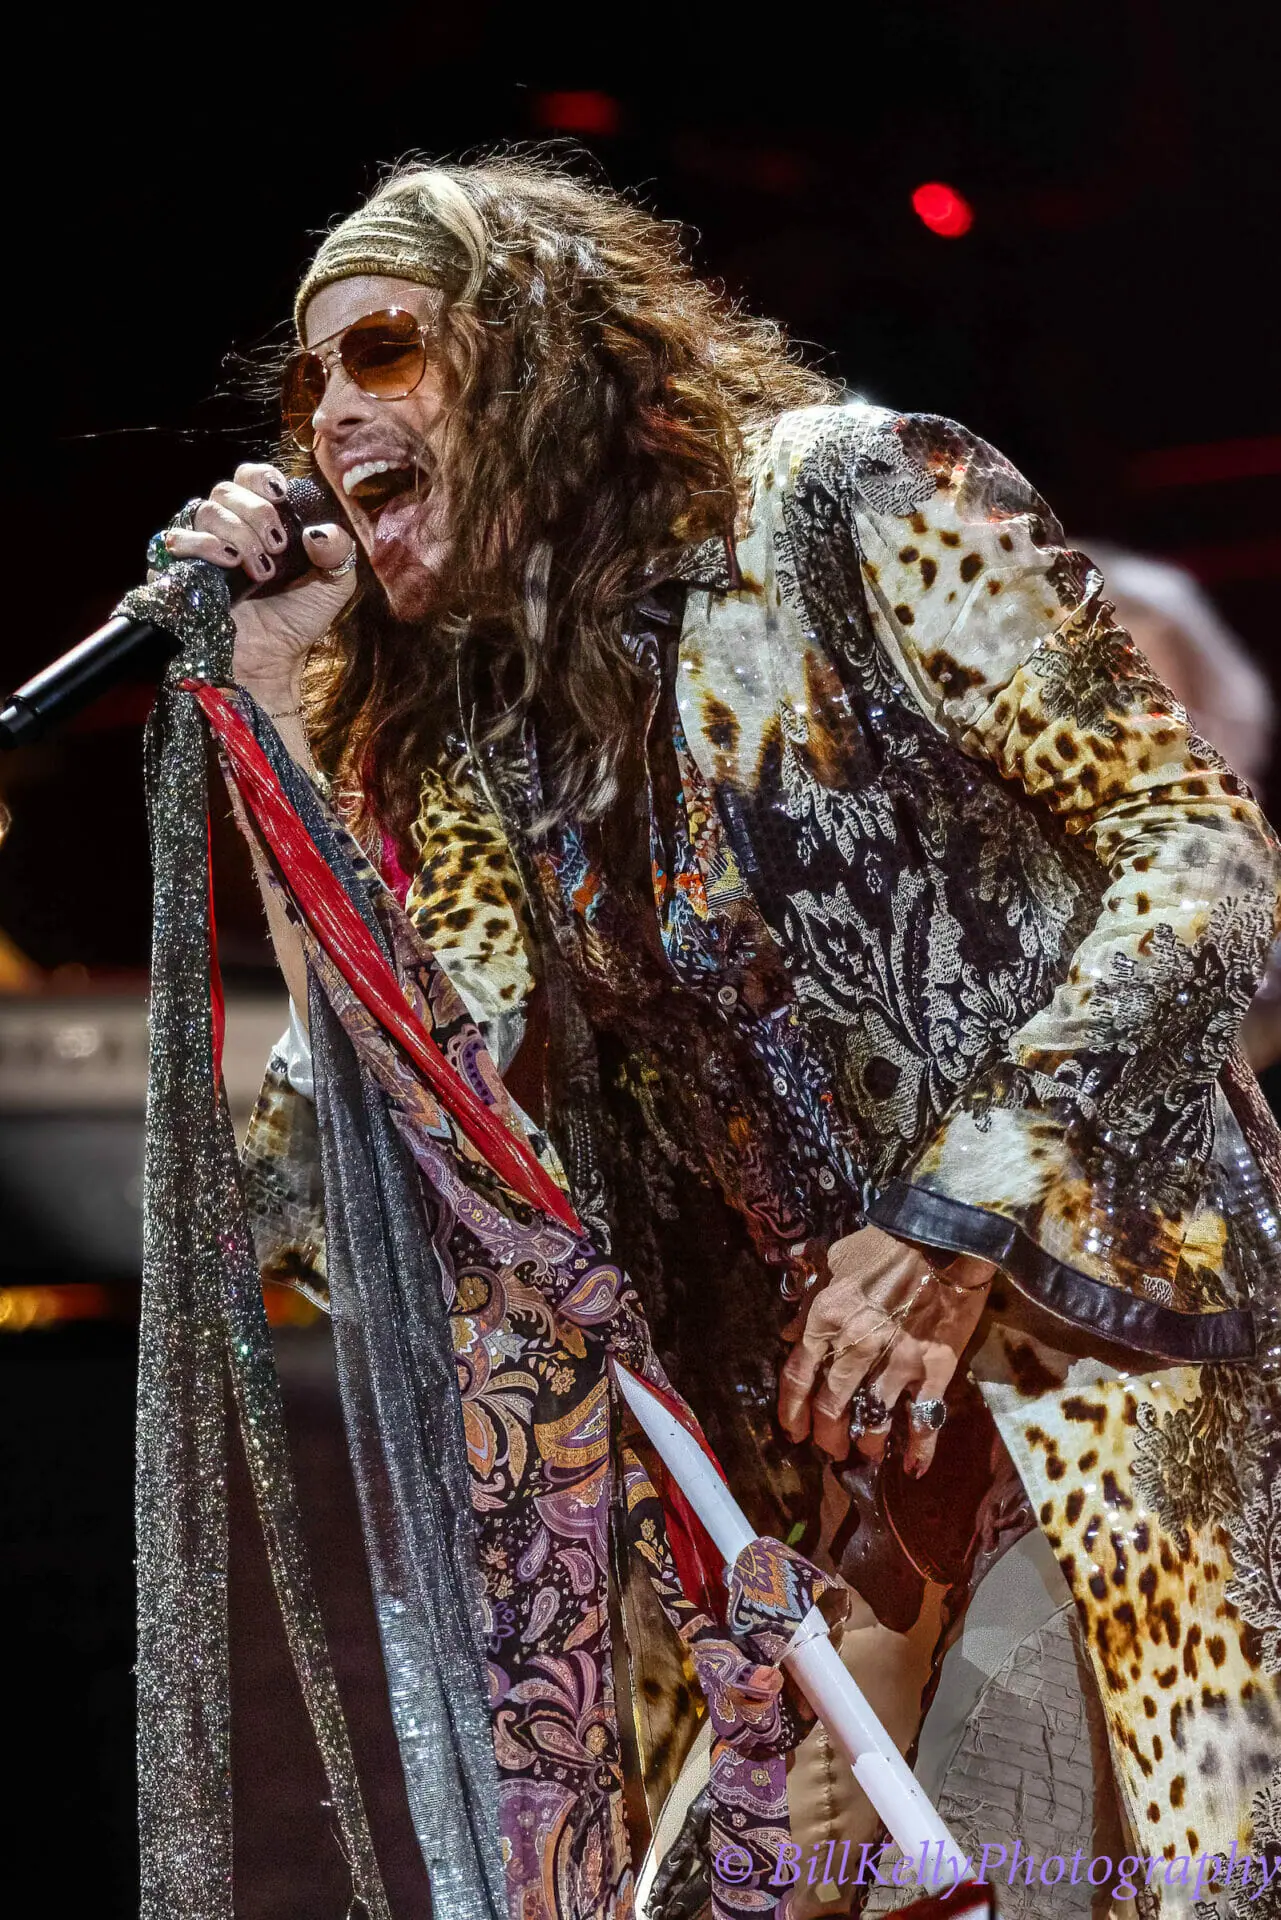 Aerosmith Postpone Farewell Tour Dates After Steven Tyler Suffers Vocal Cord Injury